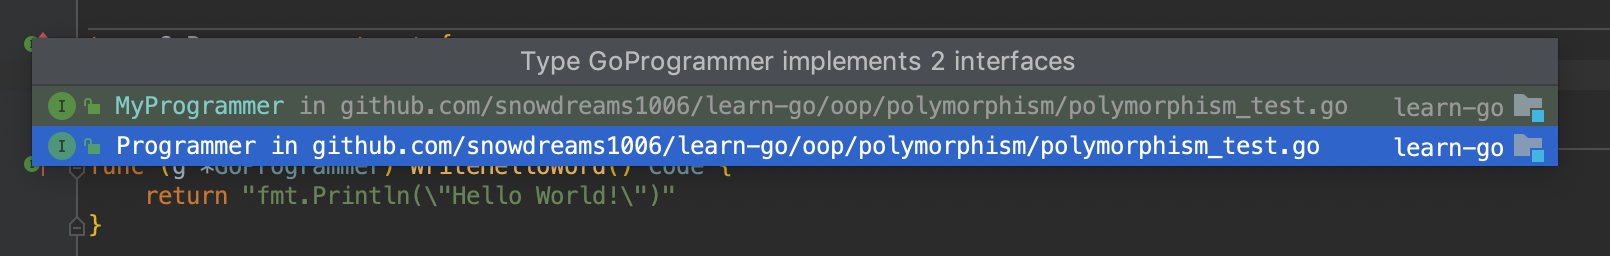 go-oop-interface-type-myProgrammer-goProgrammer.png